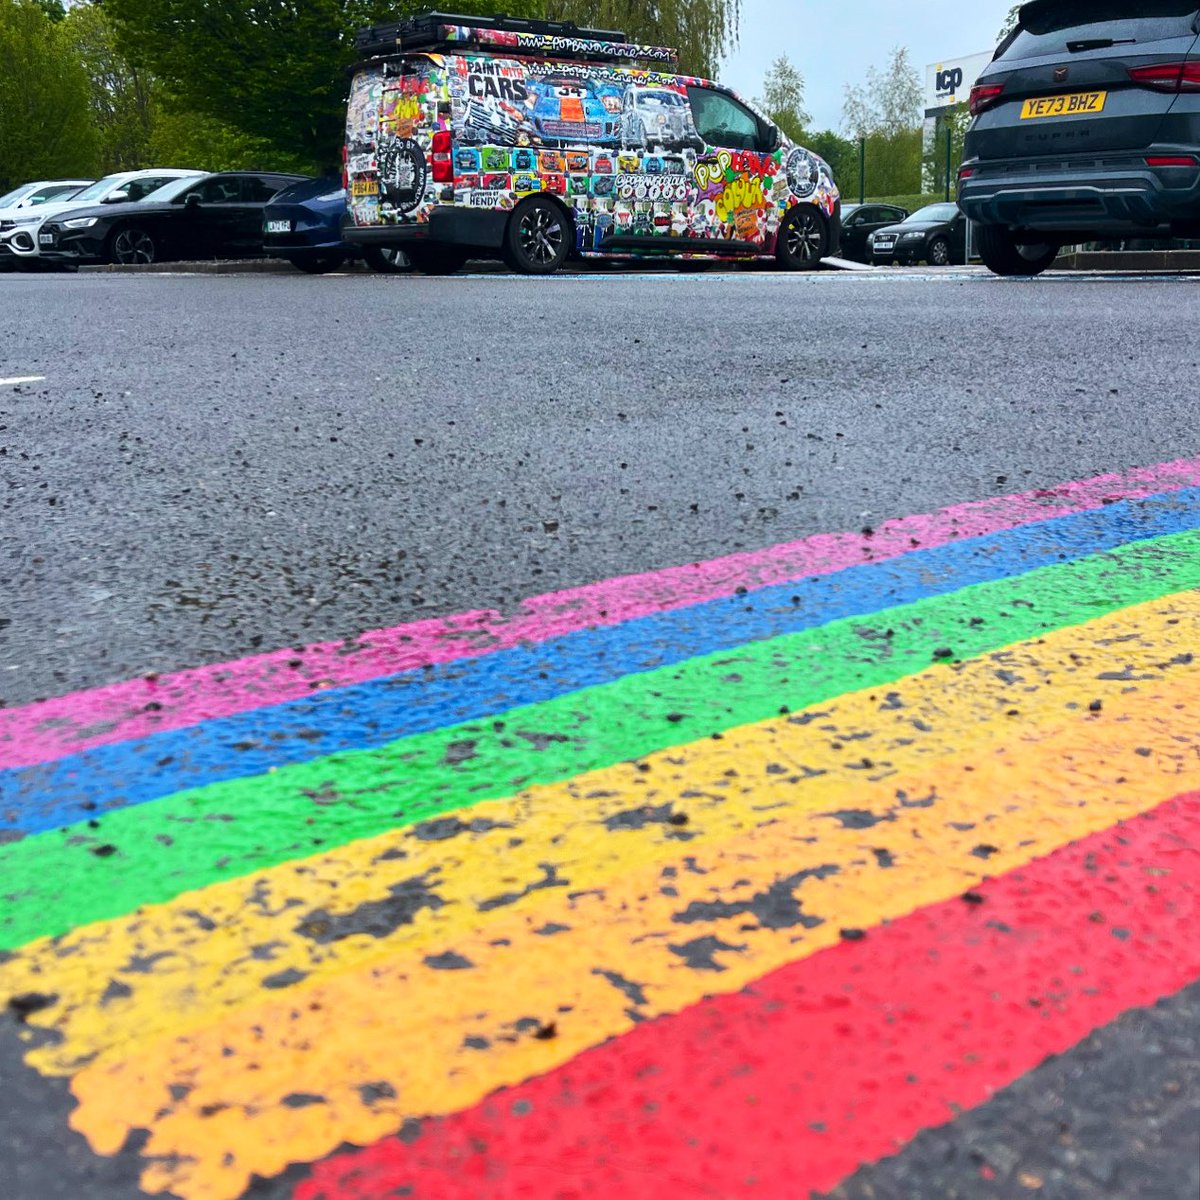 Adding a splash of colour on a grey rainy day in Milton Keynes 🌈🎨🚐